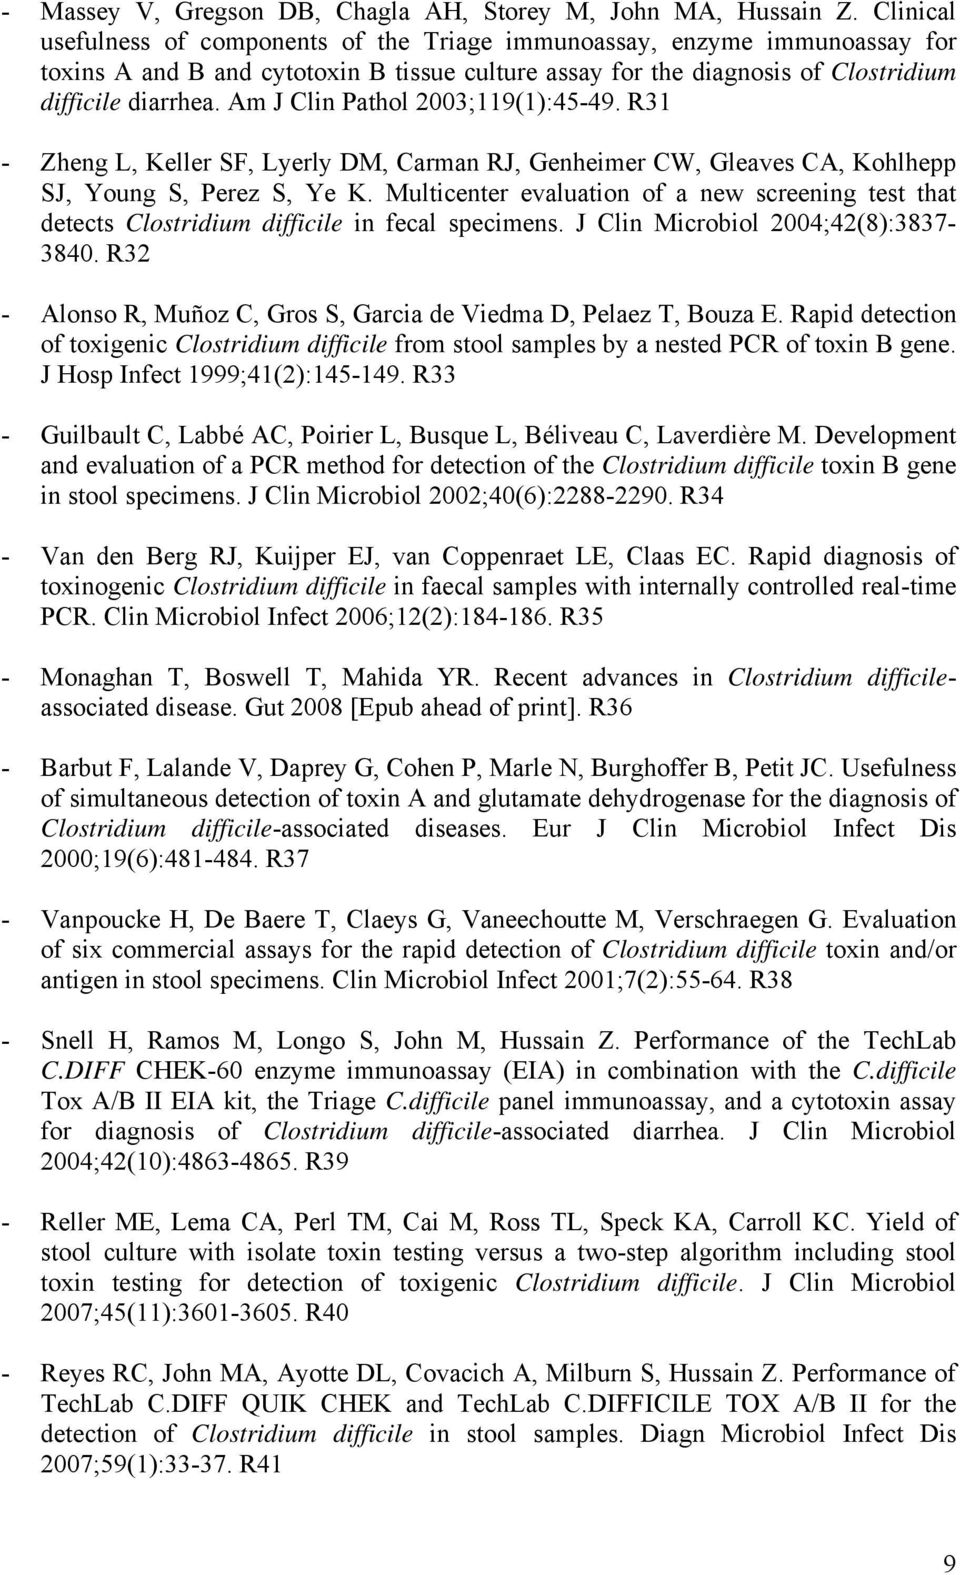 Am J Clin Pathol 2003;119(1):45-49. R31 - Zheng L, Keller SF, Lyerly DM, Carman RJ, Genheimer CW, Gleaves CA, Kohlhepp SJ, Young S, Perez S, Ye K.